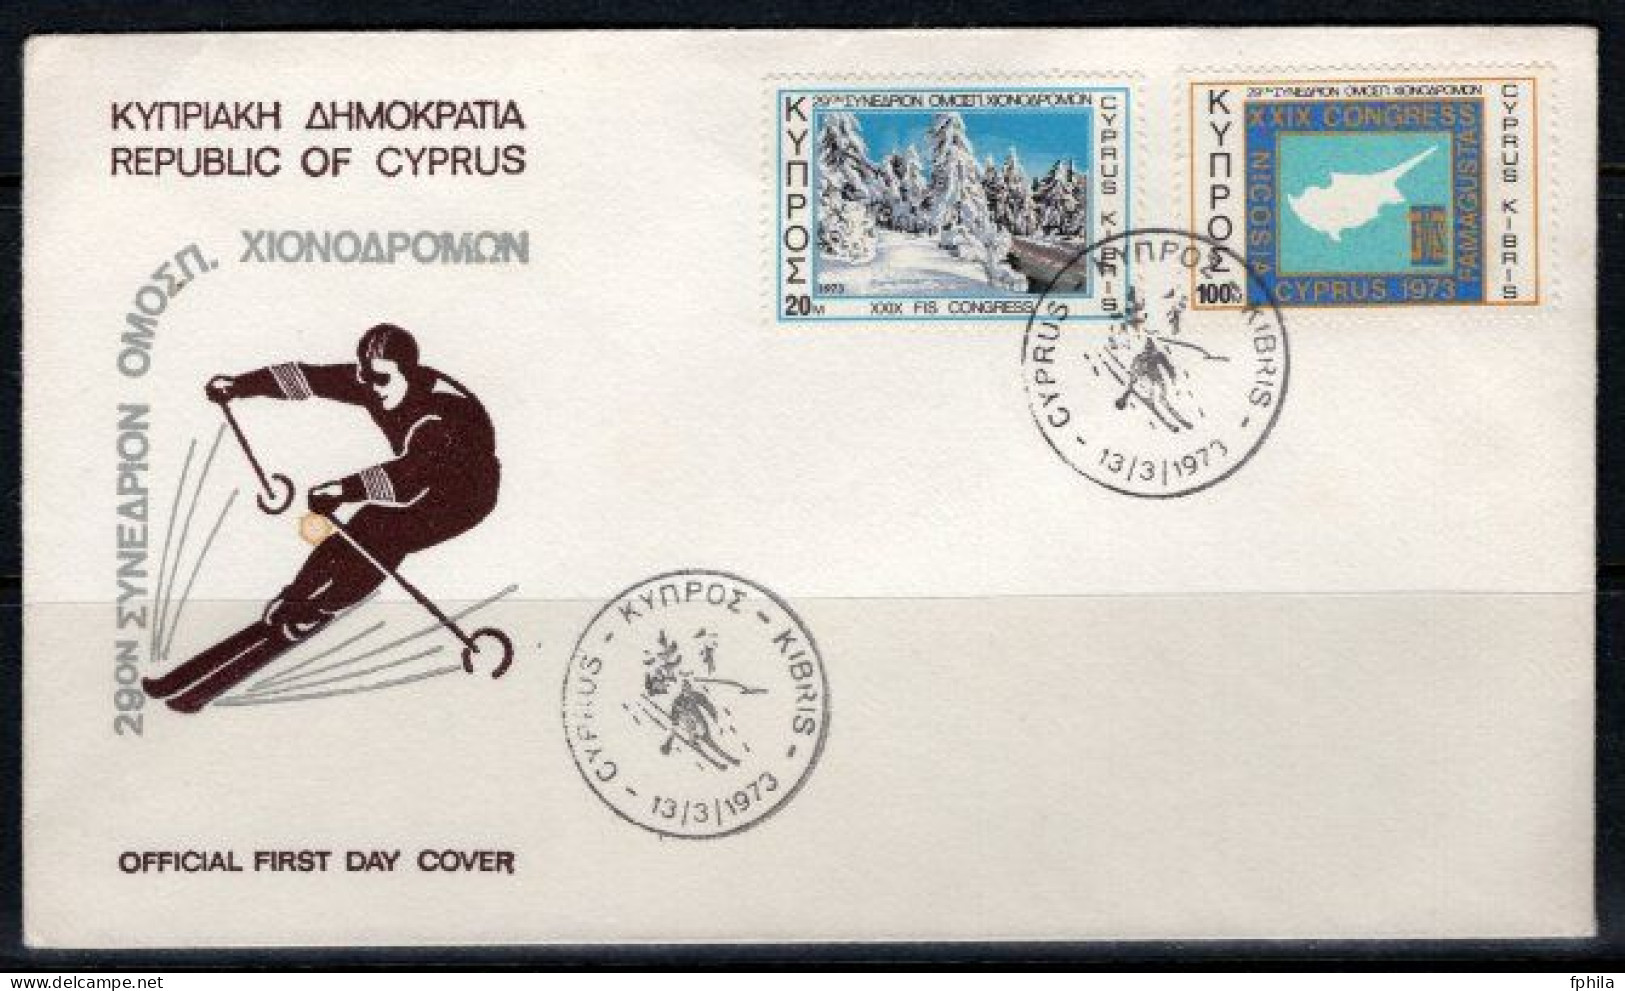 1973 CYPRUS SKI CONGRESS FDC - Lettres & Documents